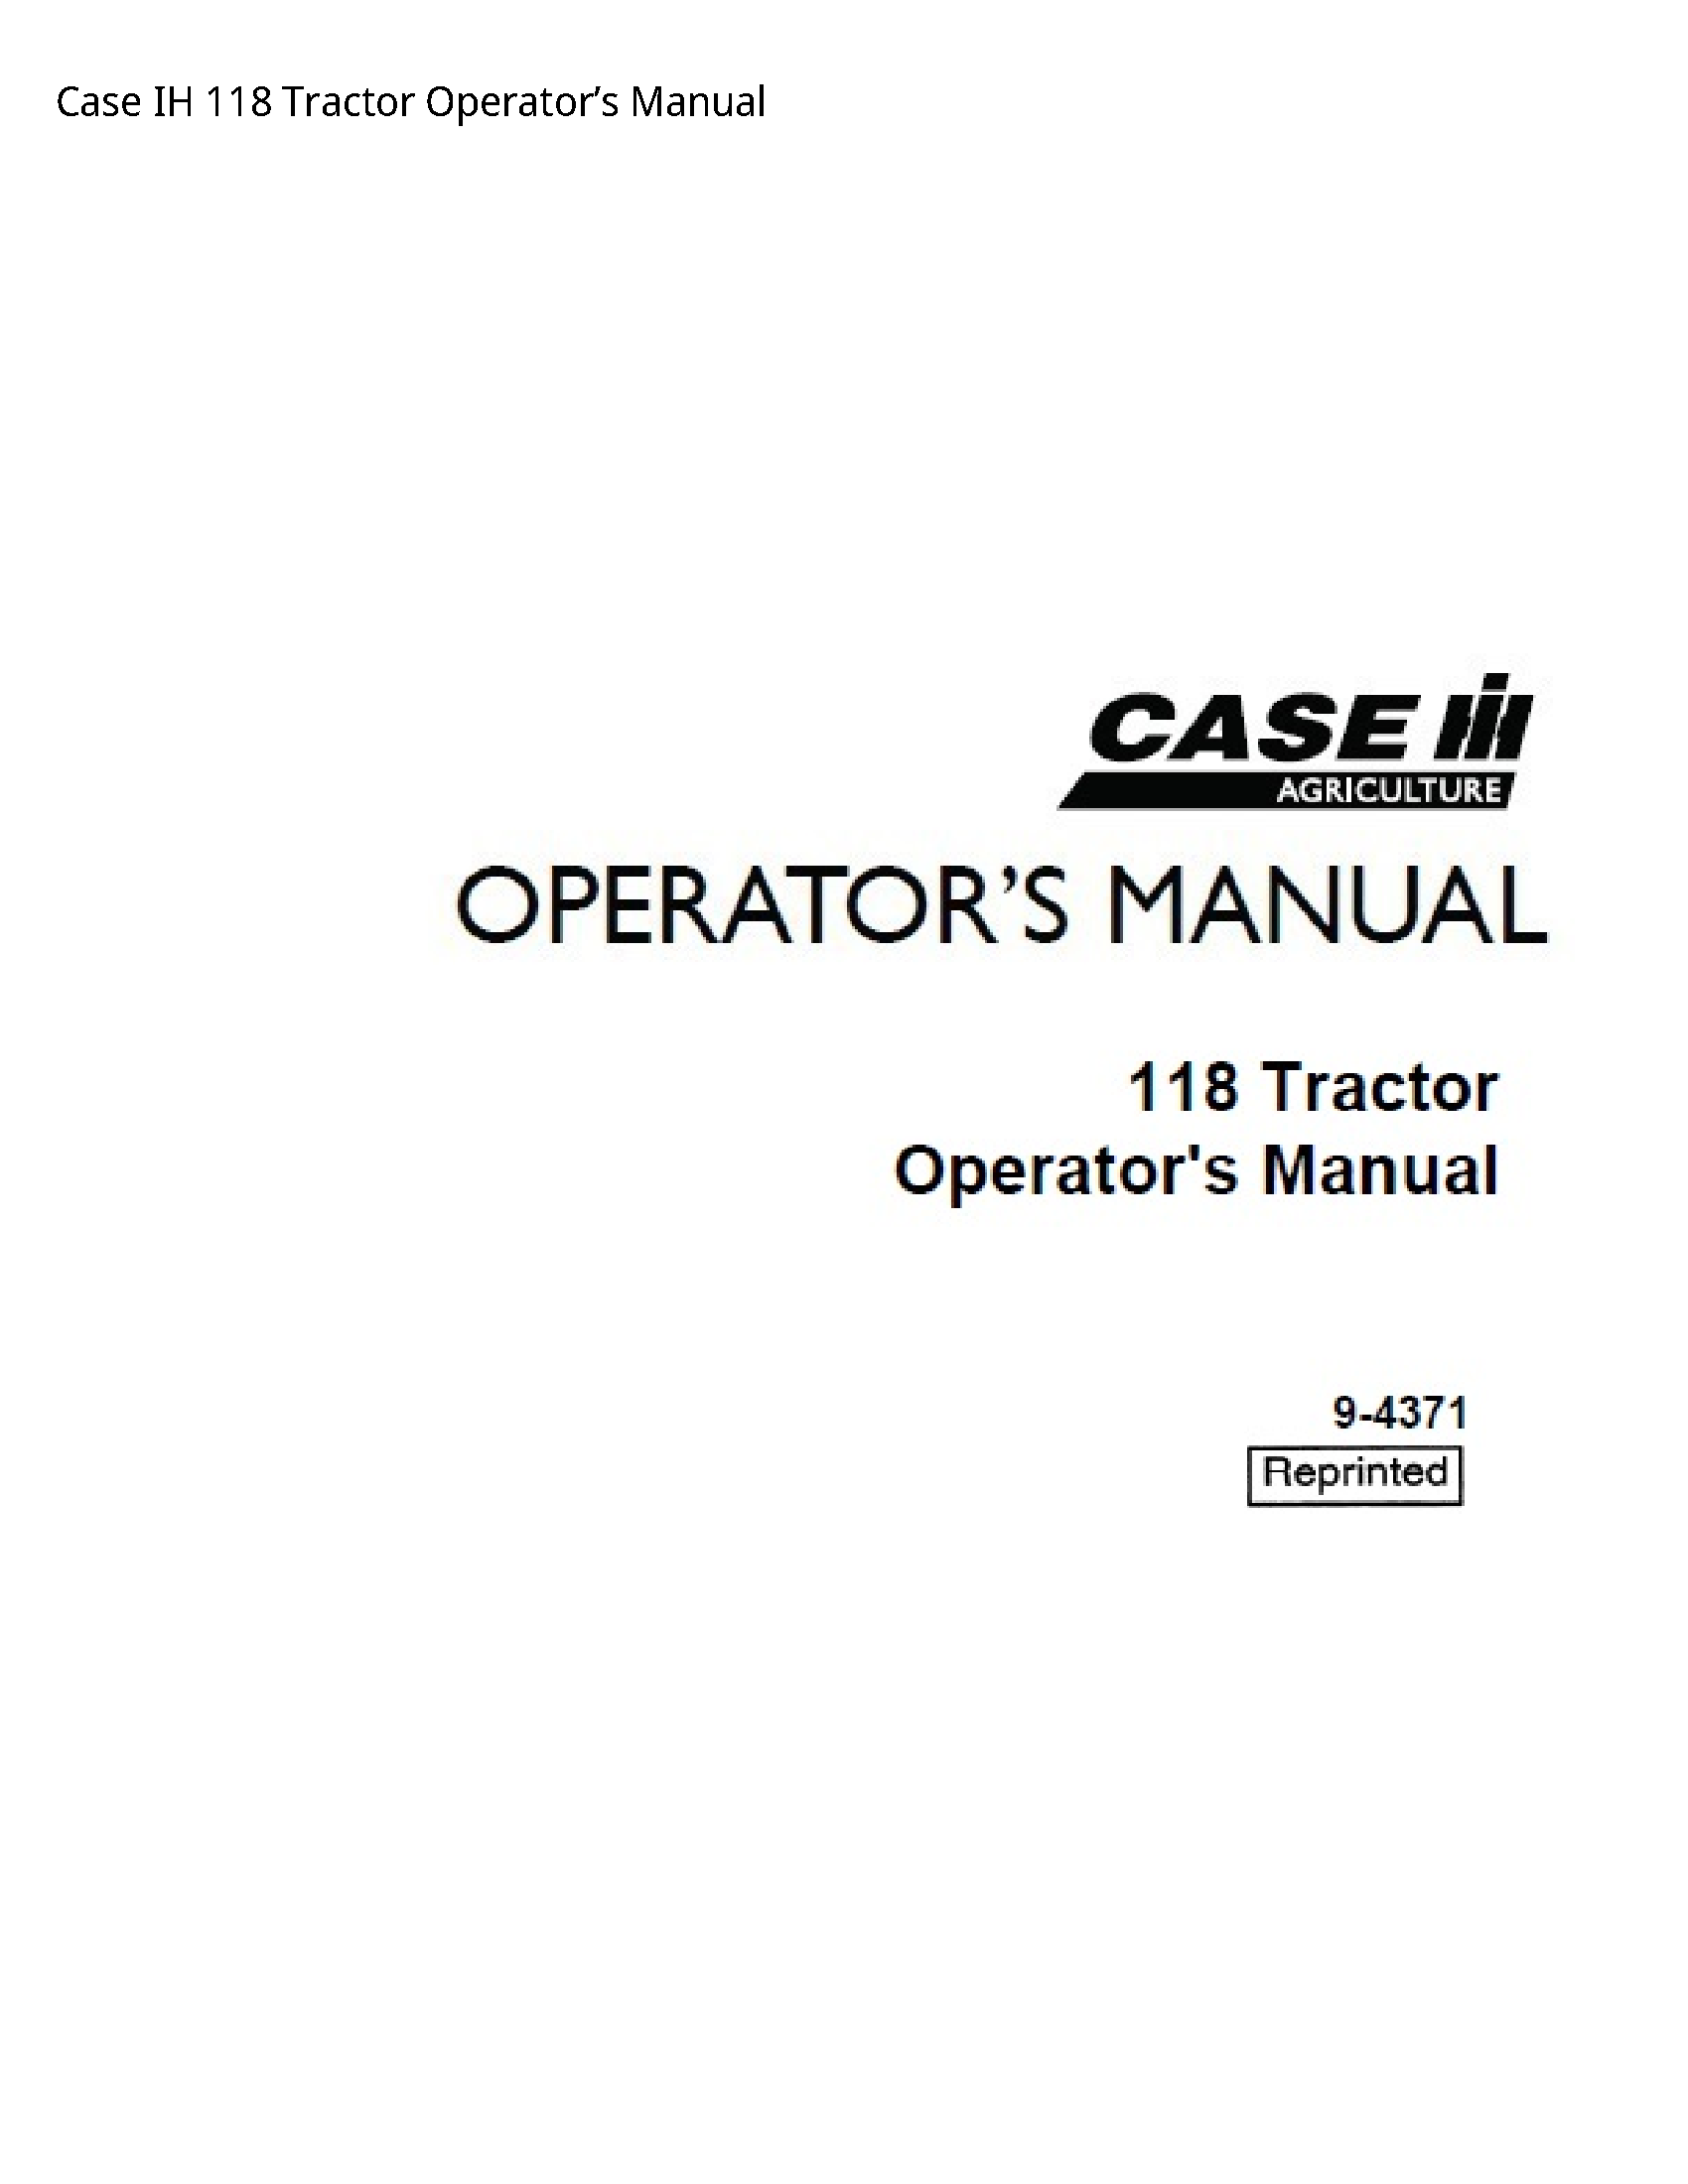 Case/Case IH 118 IH Tractor Operator’s manual